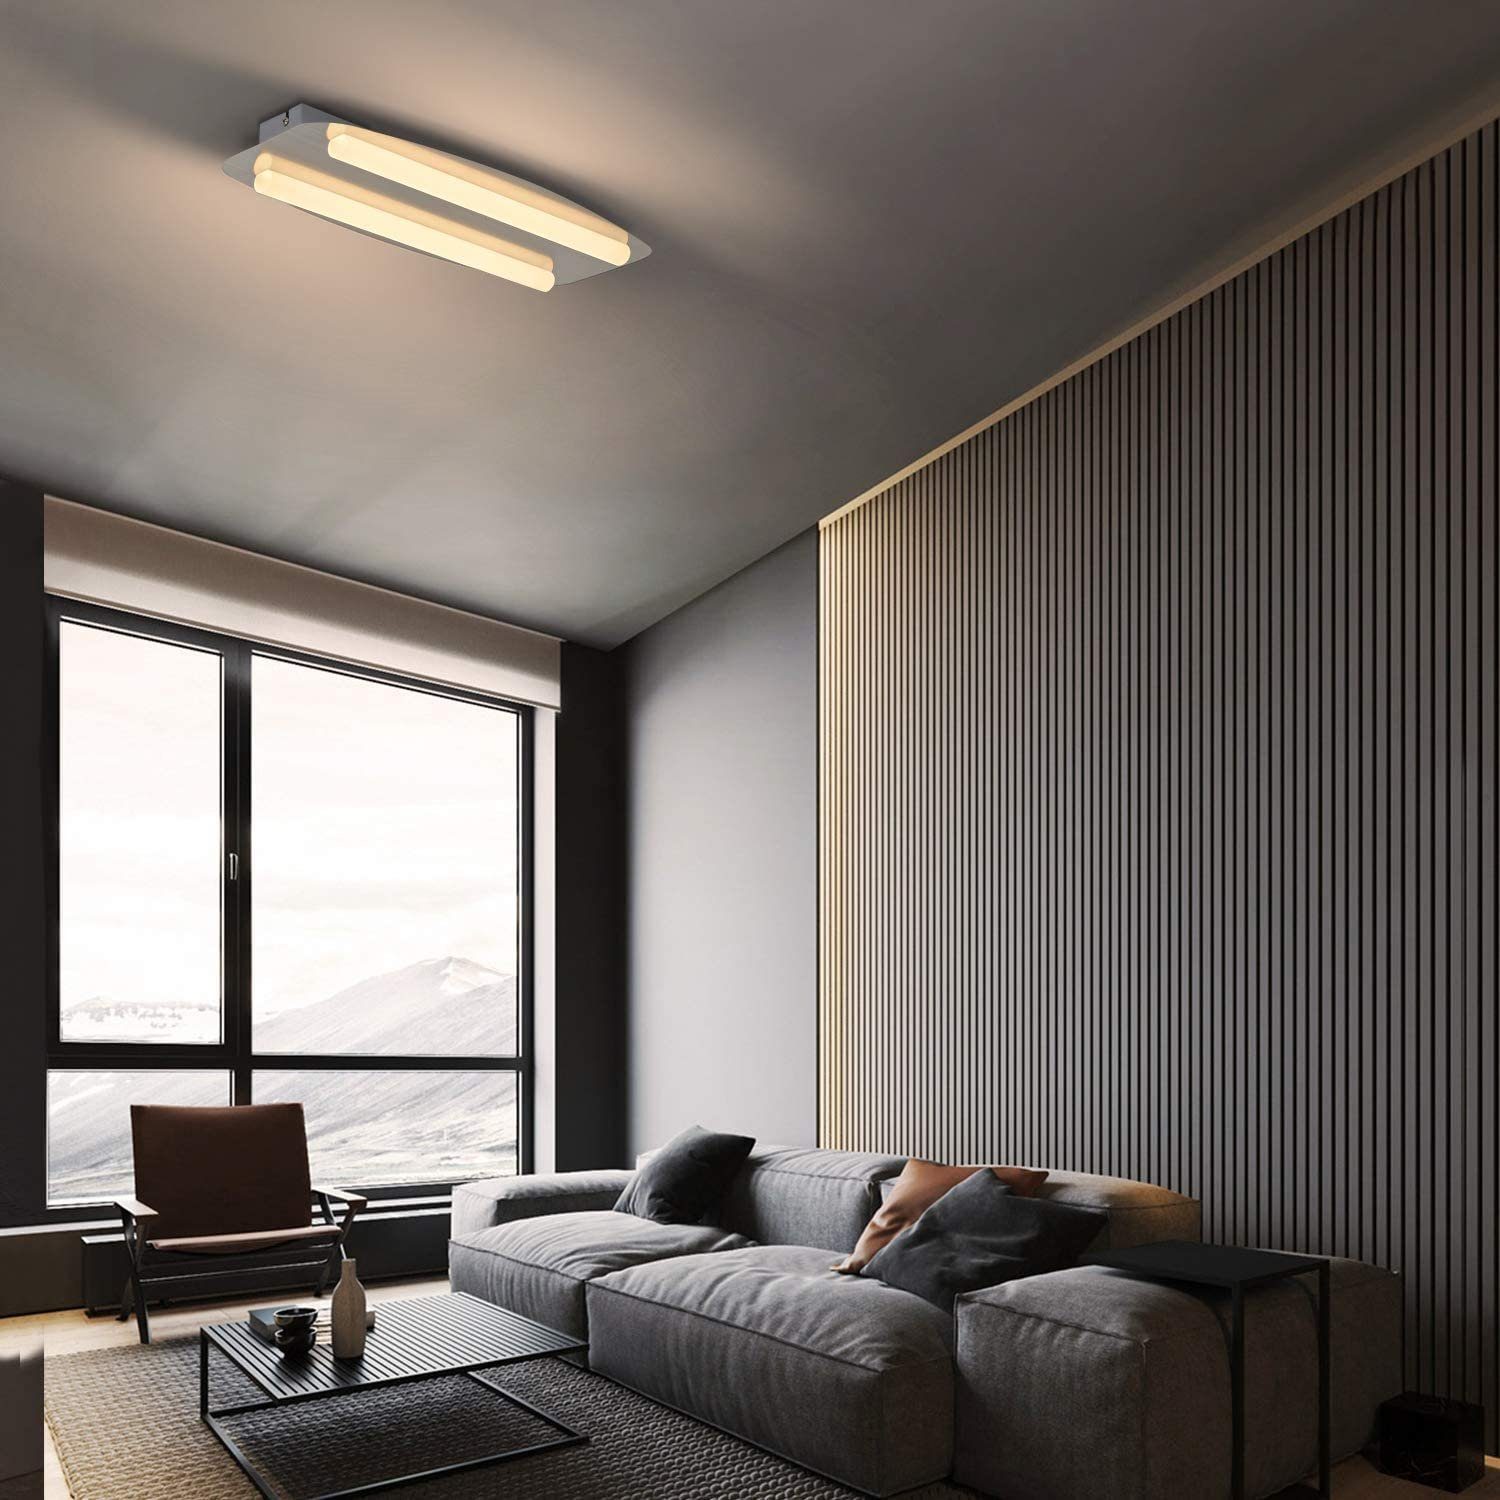 Nickel Wandleuchte Acryl fest LED Innen LED Deckenleuchte ZMH integriert, Kronleuchter, Küche Warmweiß